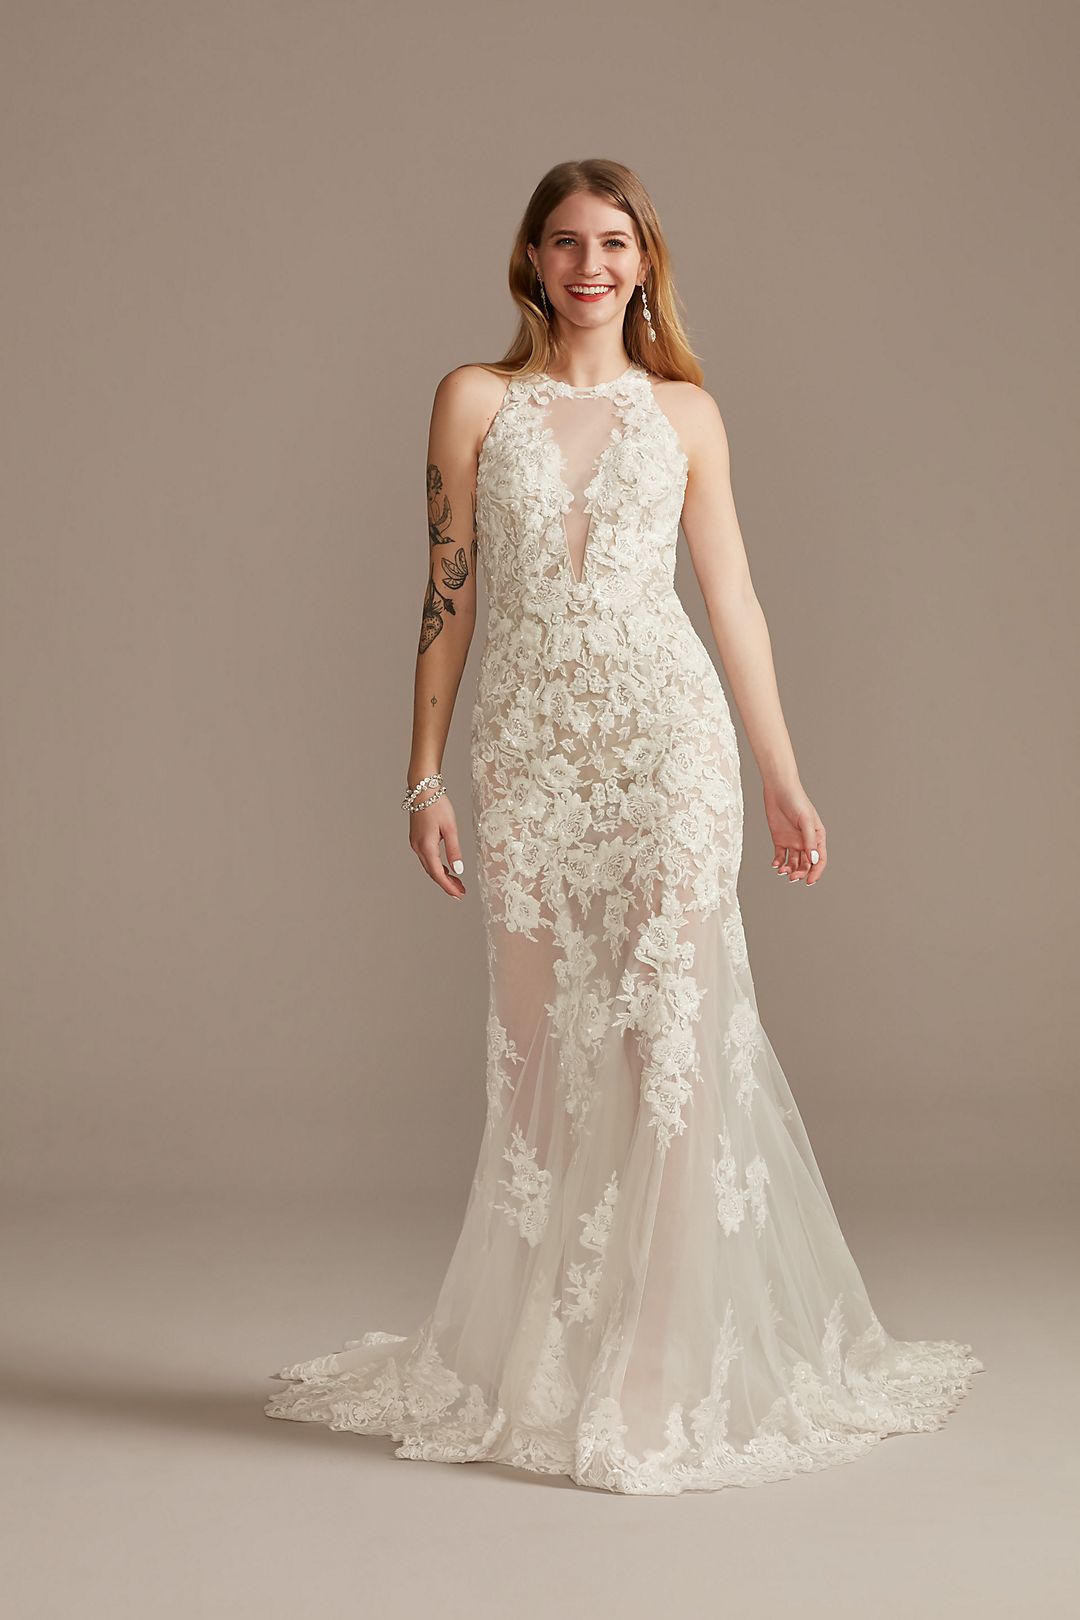 Illusion Sequin Floral Applique Wedding Dress Image 1